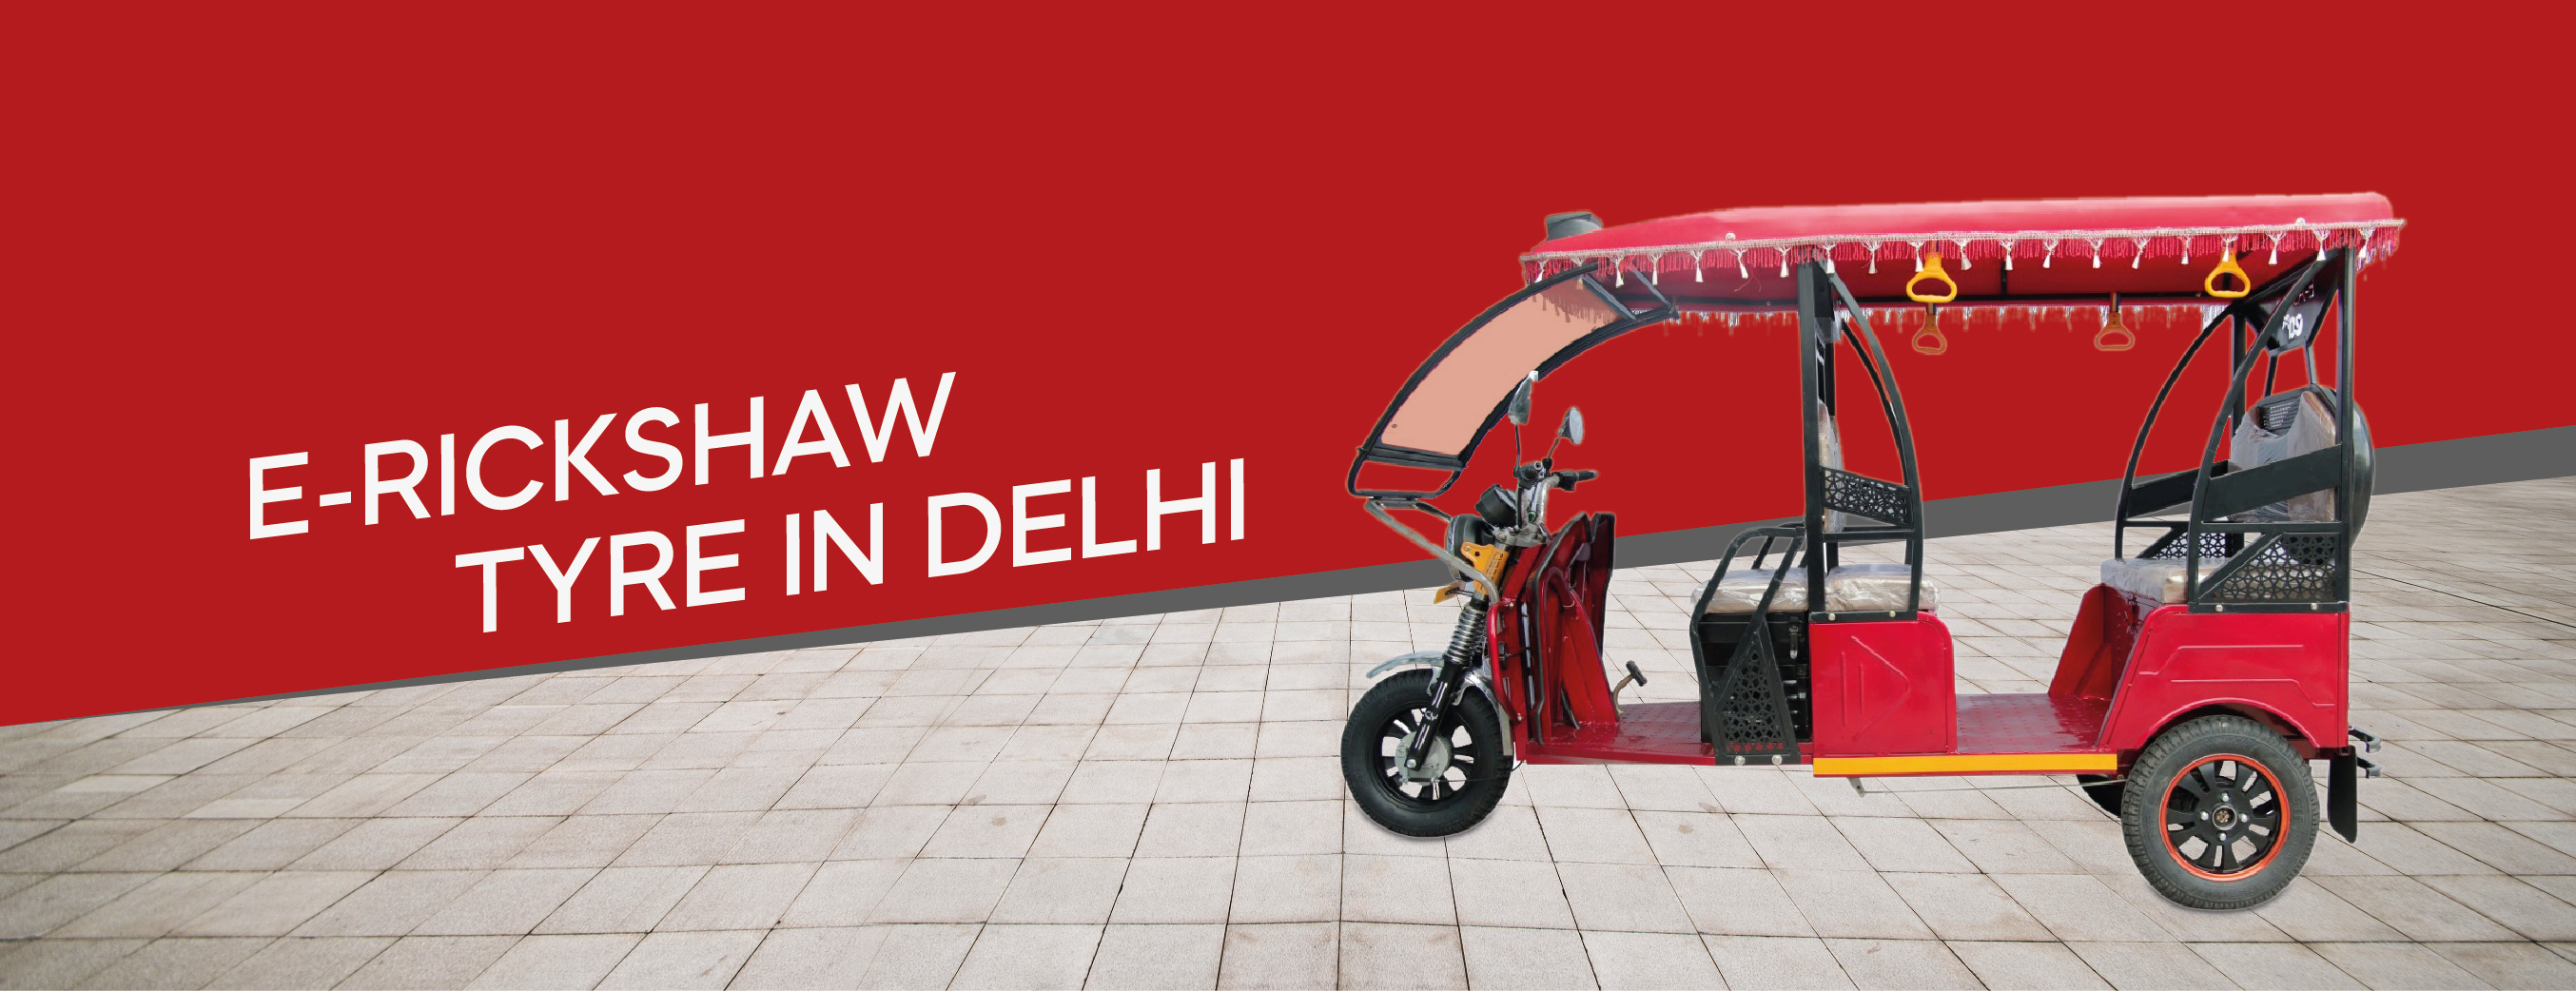 E-rickshaw tyre in Delhi 